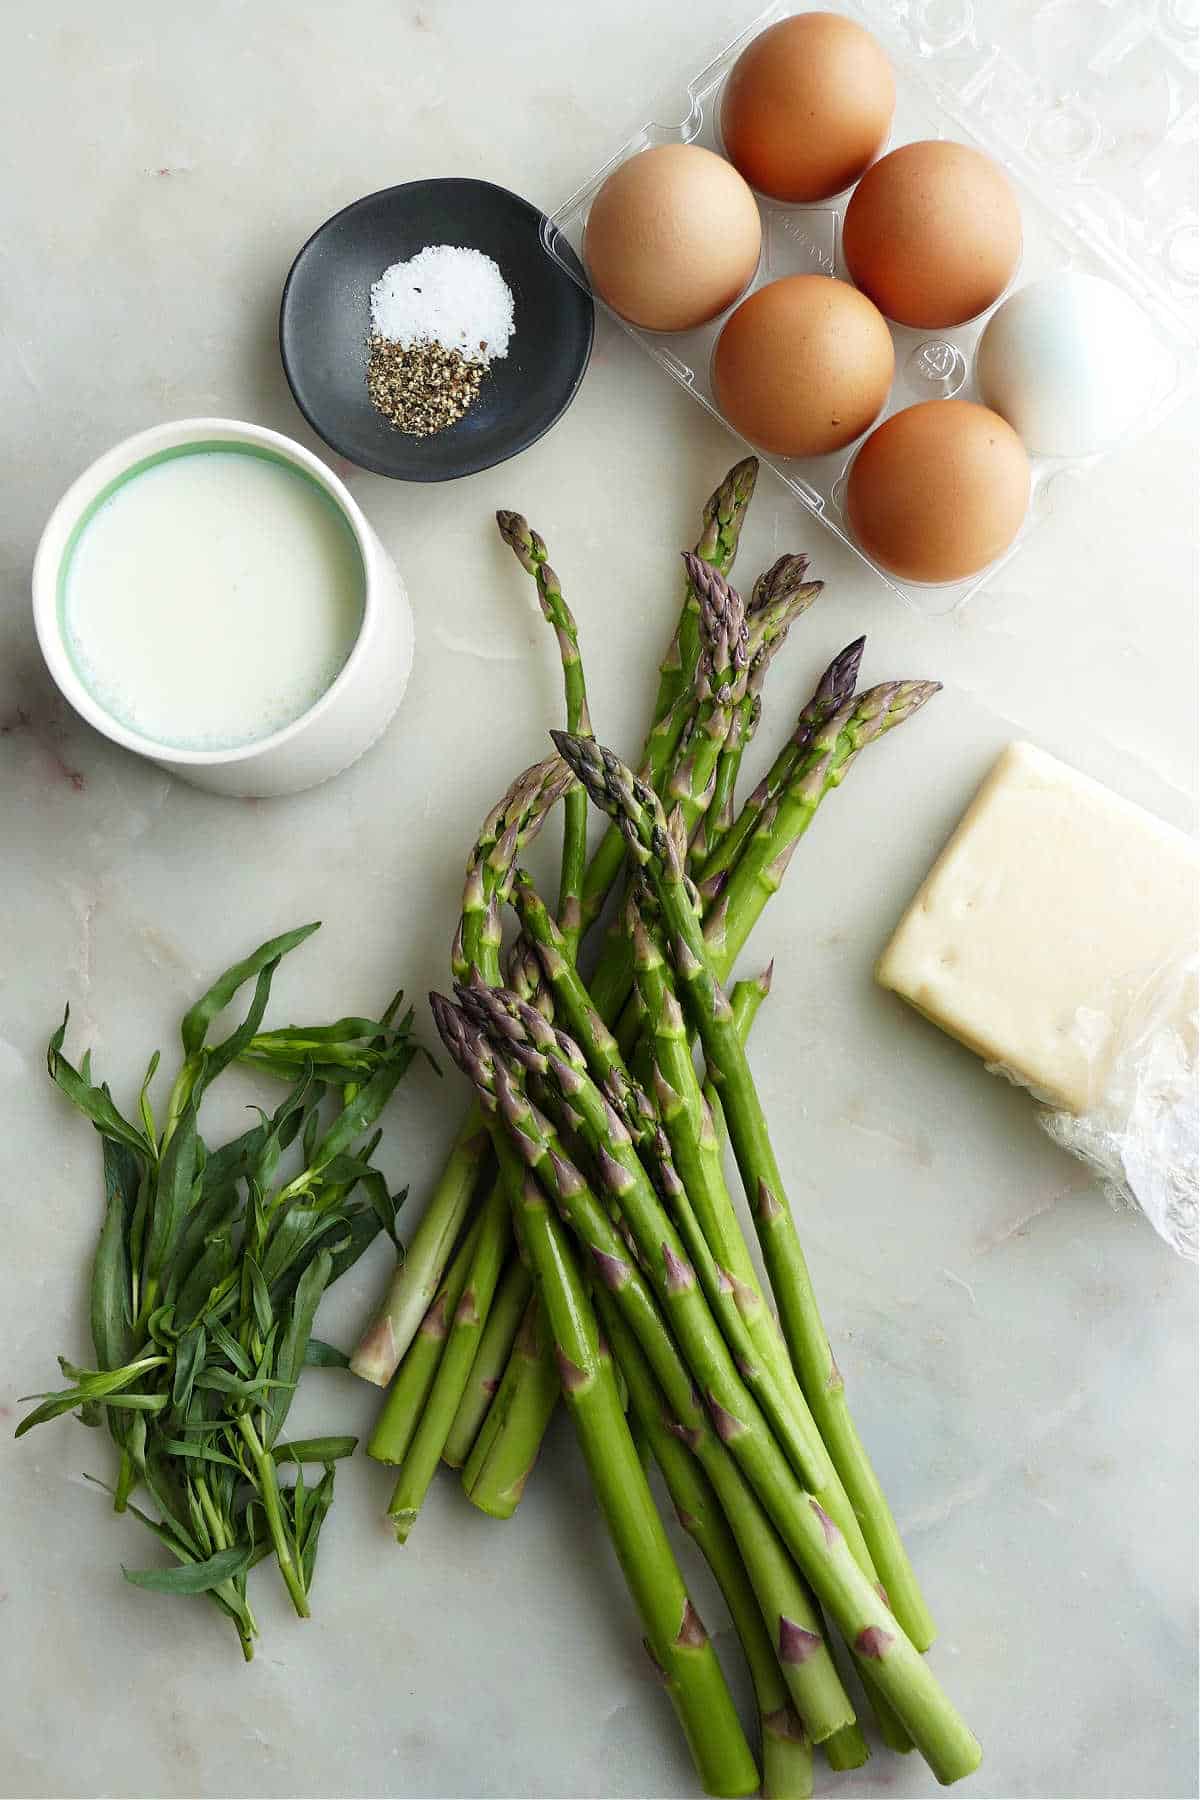 milk, seasonings, eggs, asparagus, Swiss cheese, and tarragon on a counter